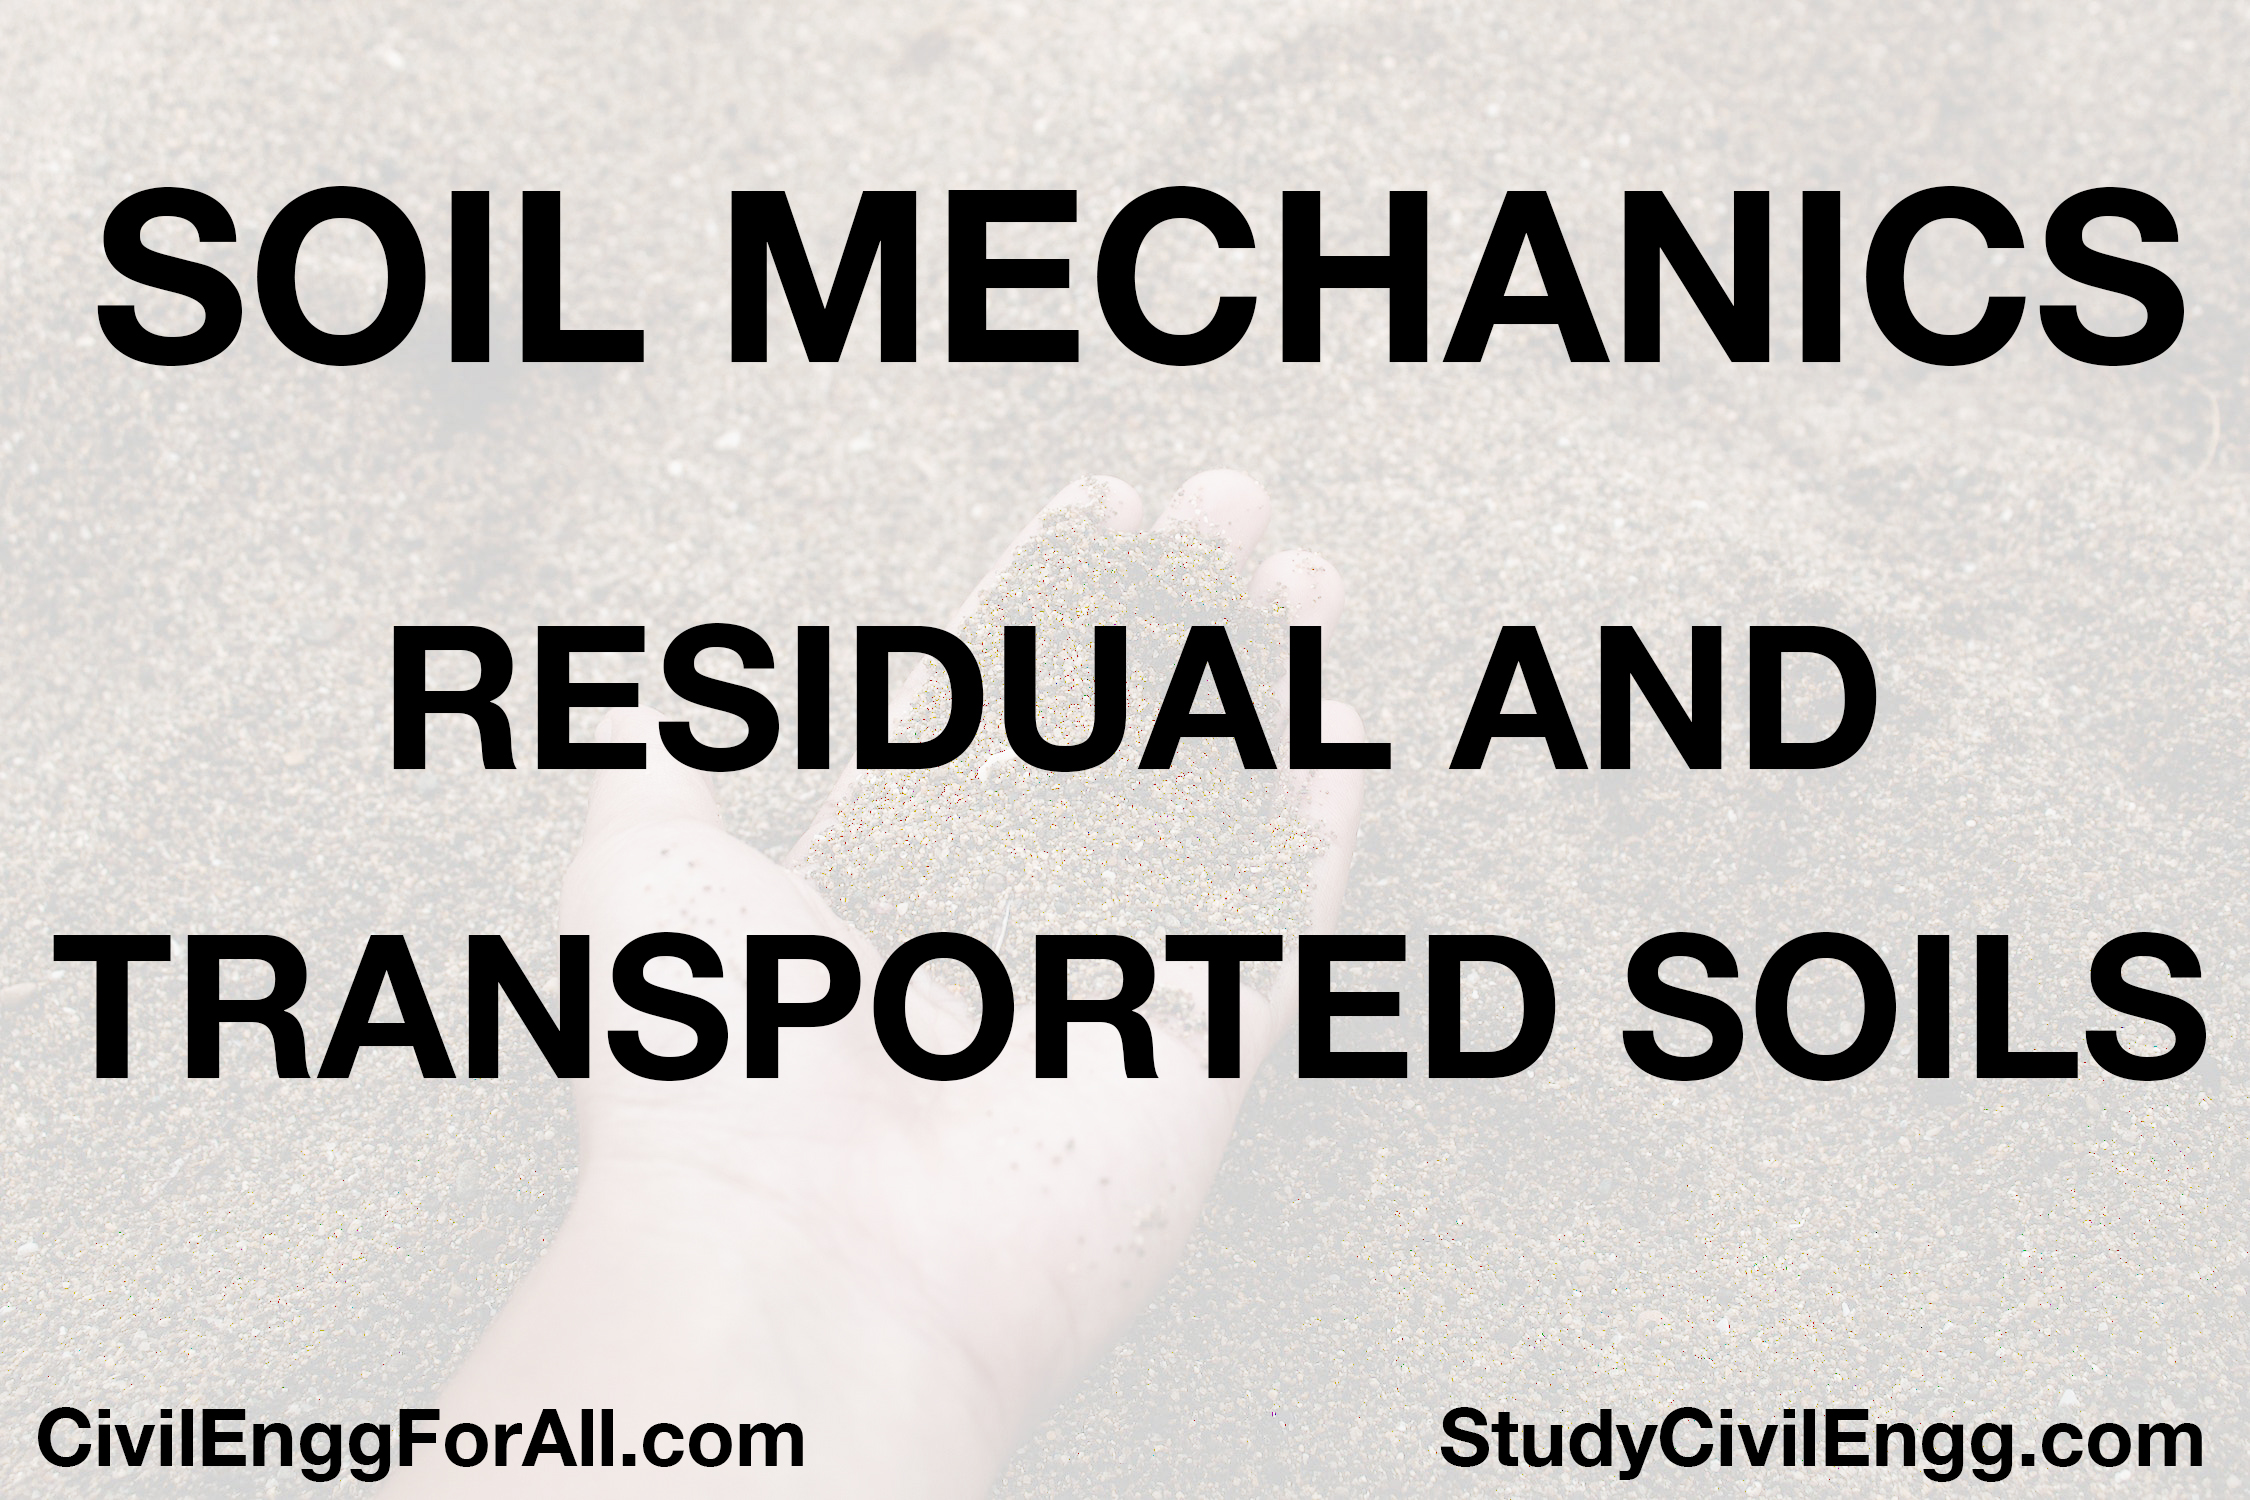 Residual & Transported Soils - Soil Mechanics - StudyCivilEngg.com